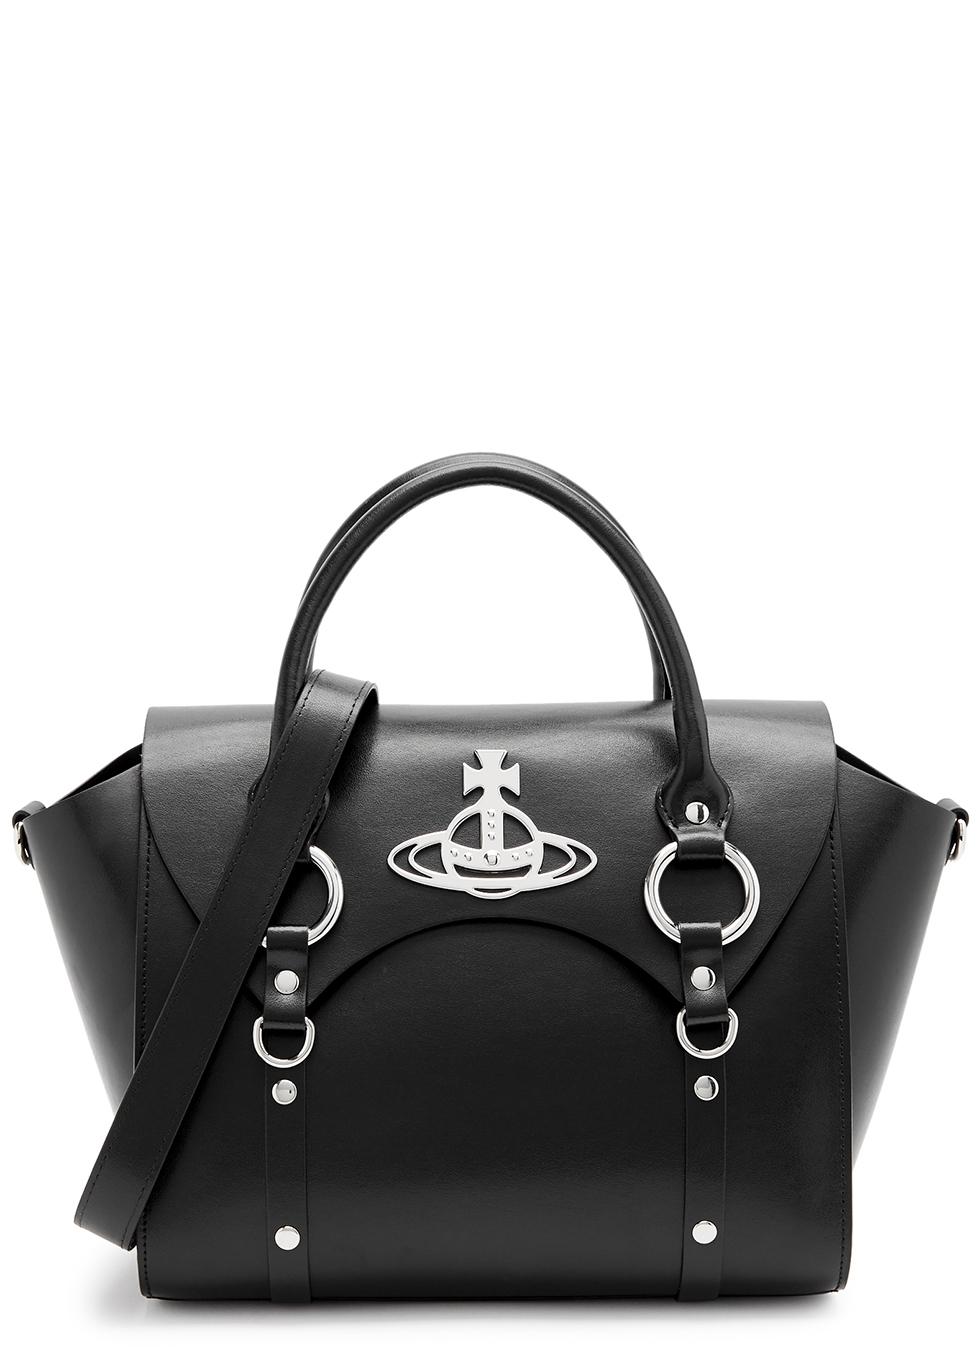 Vivienne Westwood Betty Medium Leather Shoulder Bag in Black | Lyst